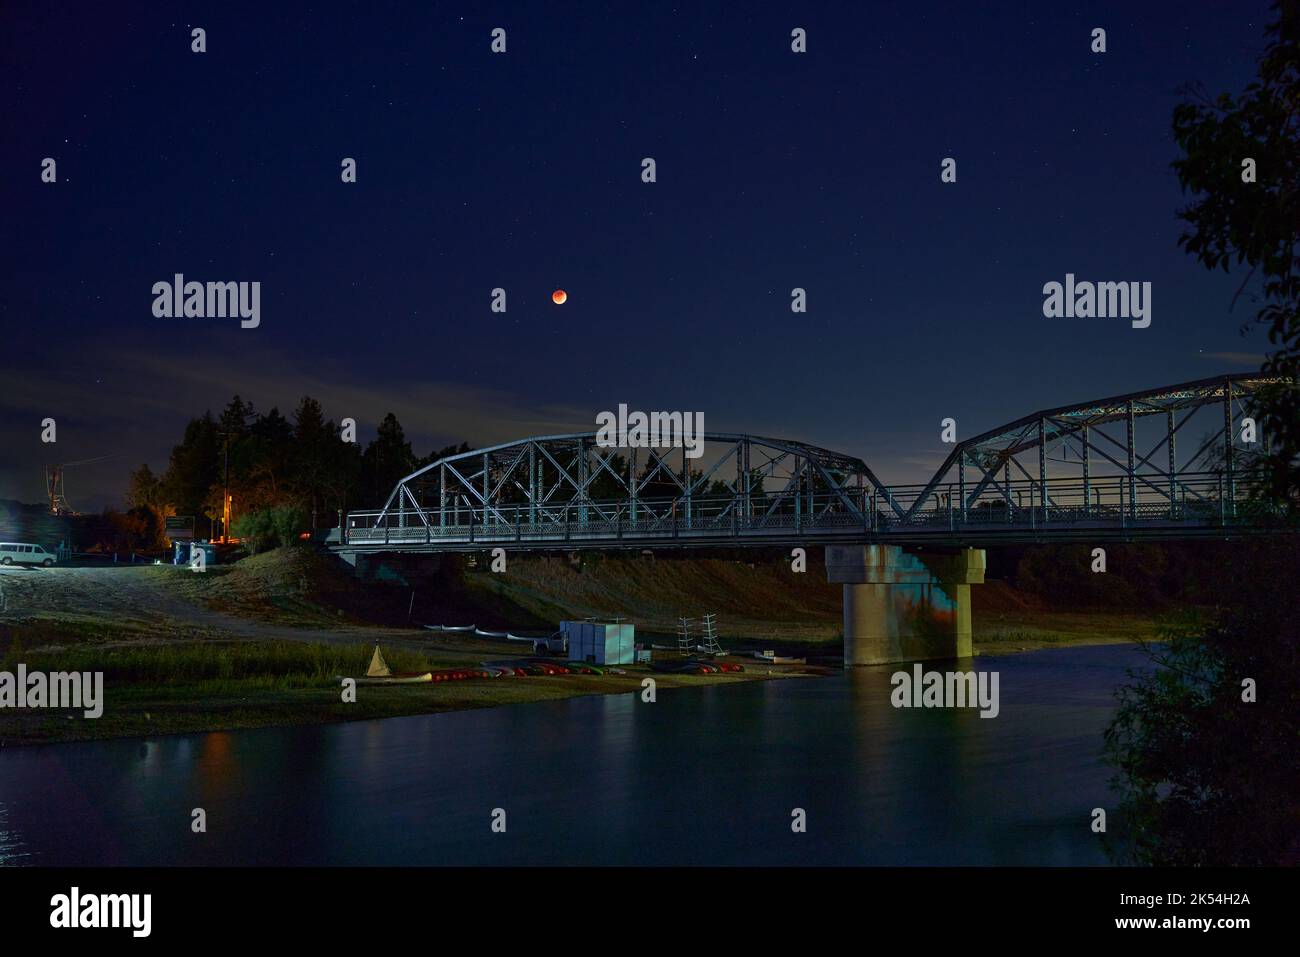 Lunar eclipse seen at the Veterans Memorial Bridge on the Russian River in Healdsburg, California. Stock Photo